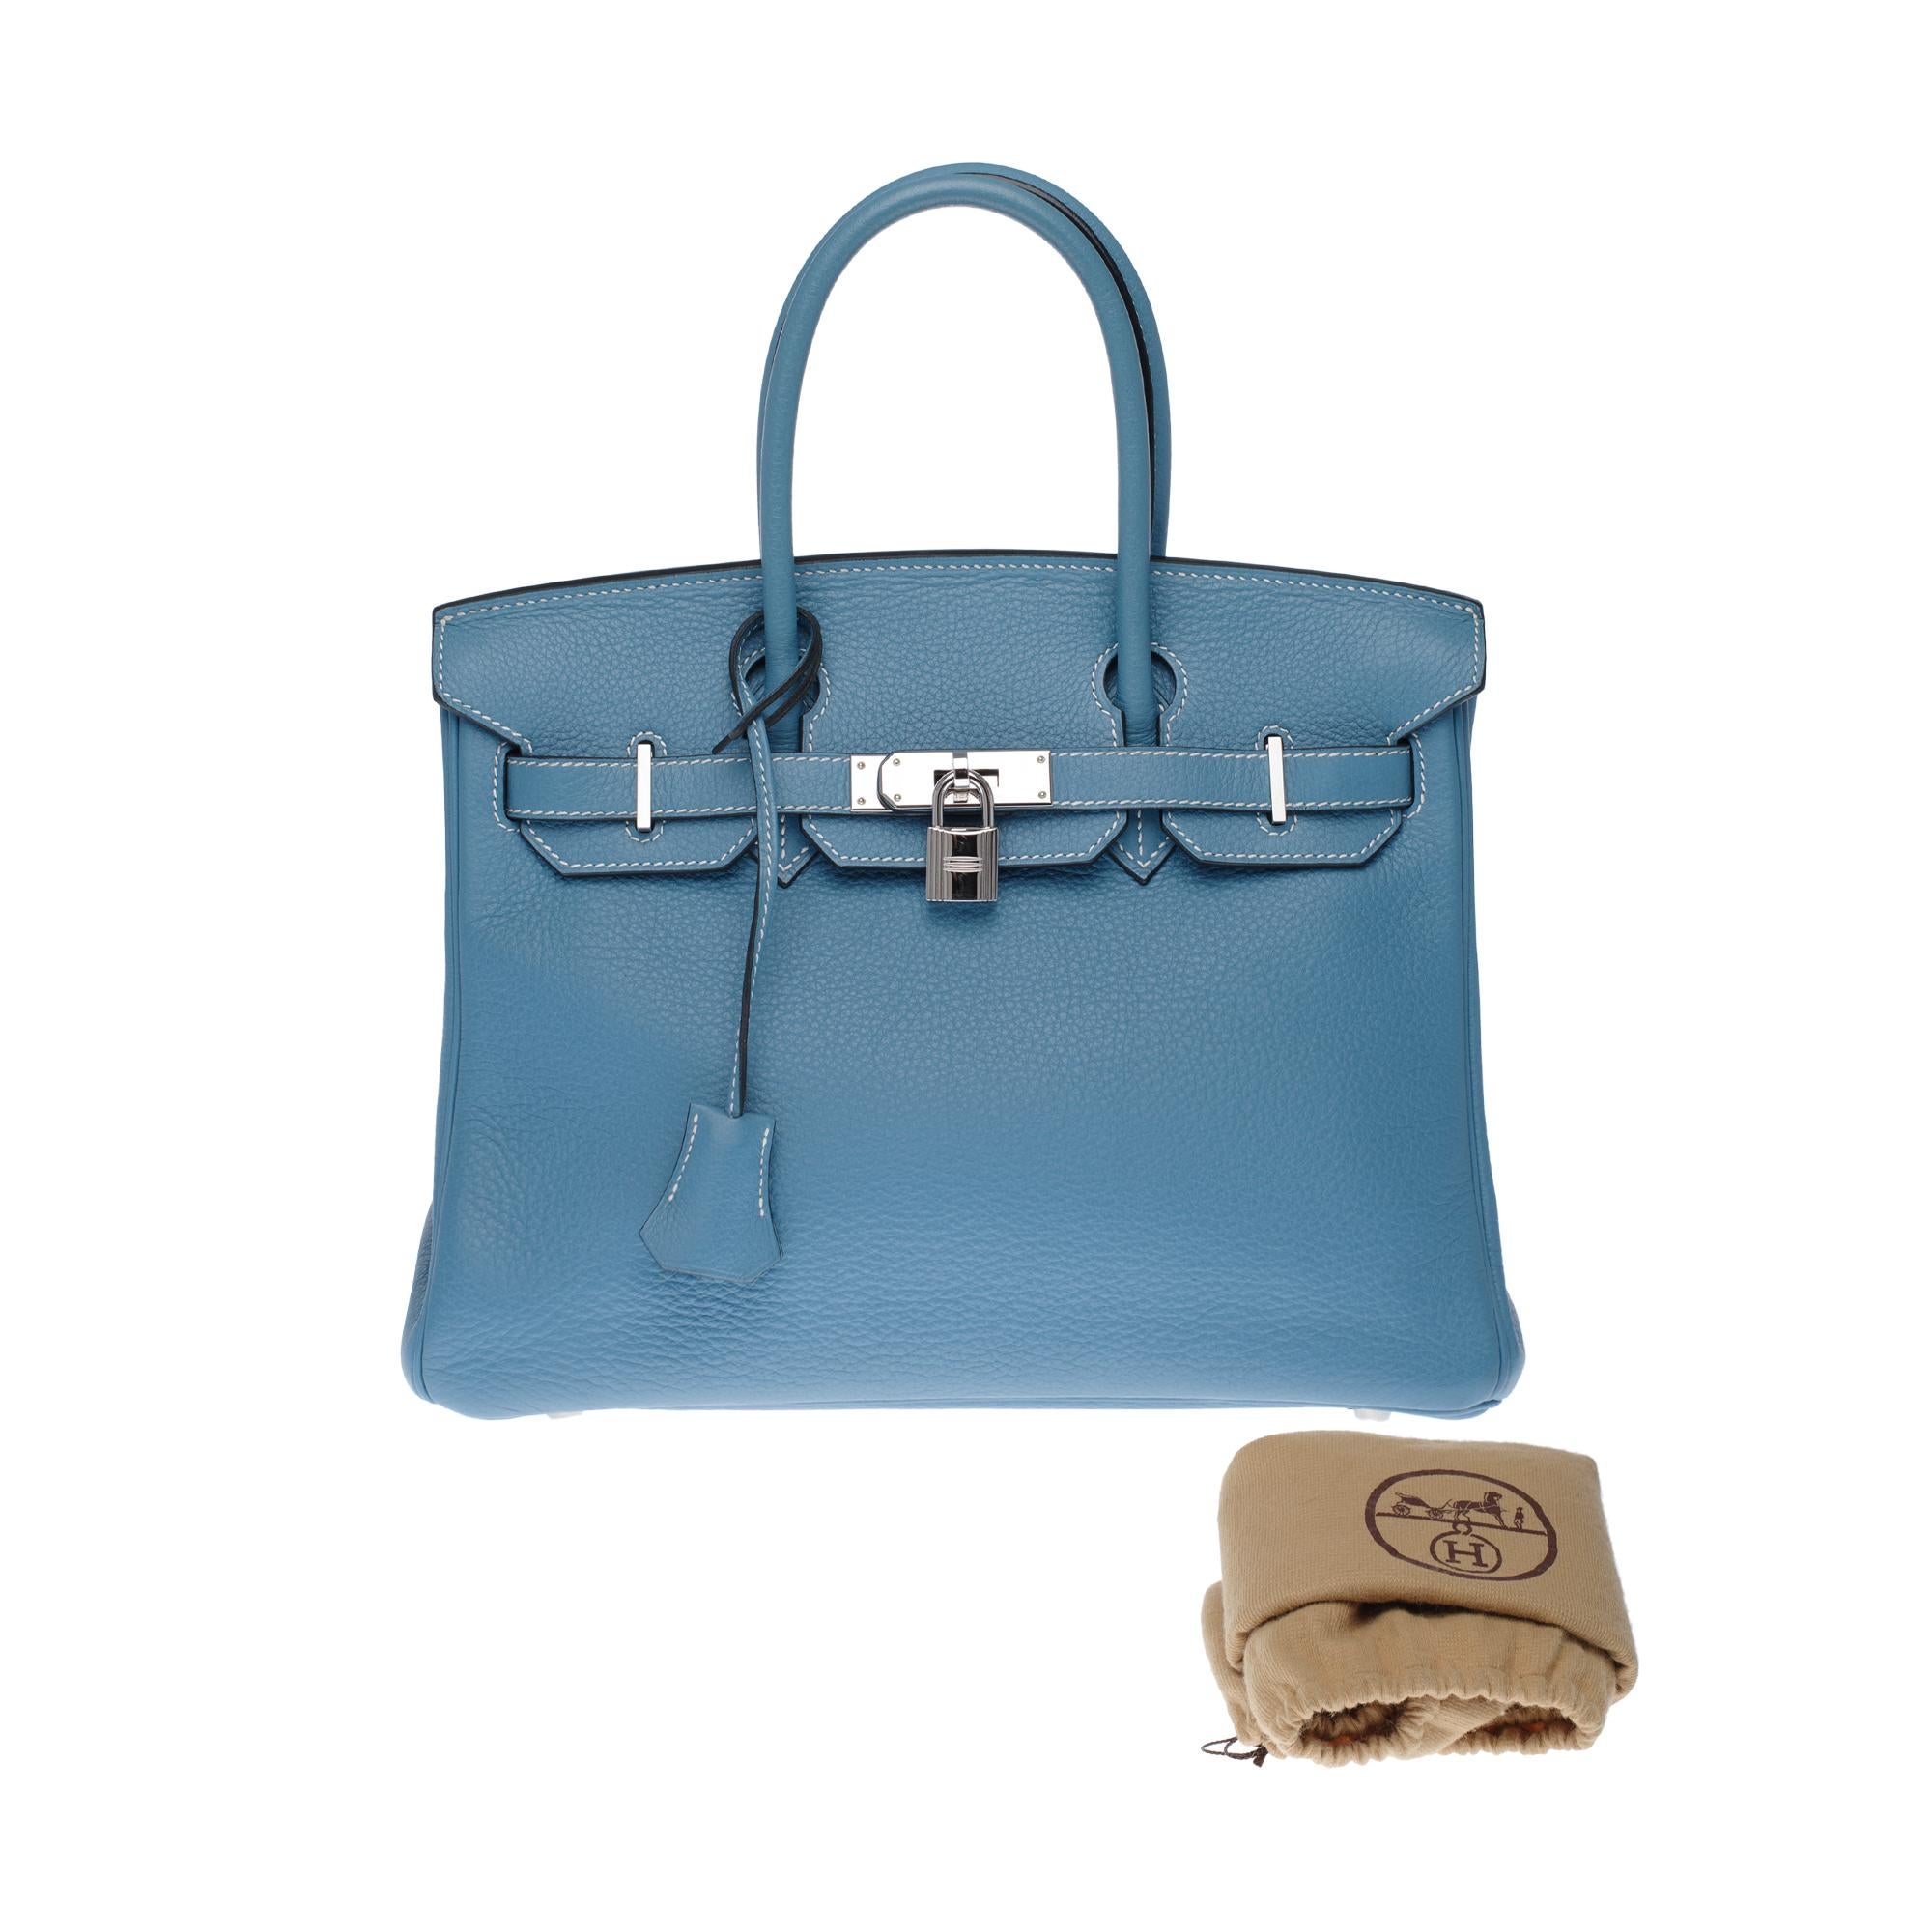 Hermès Birkin 30 handbag in Togo blue jean leather, PHW 7